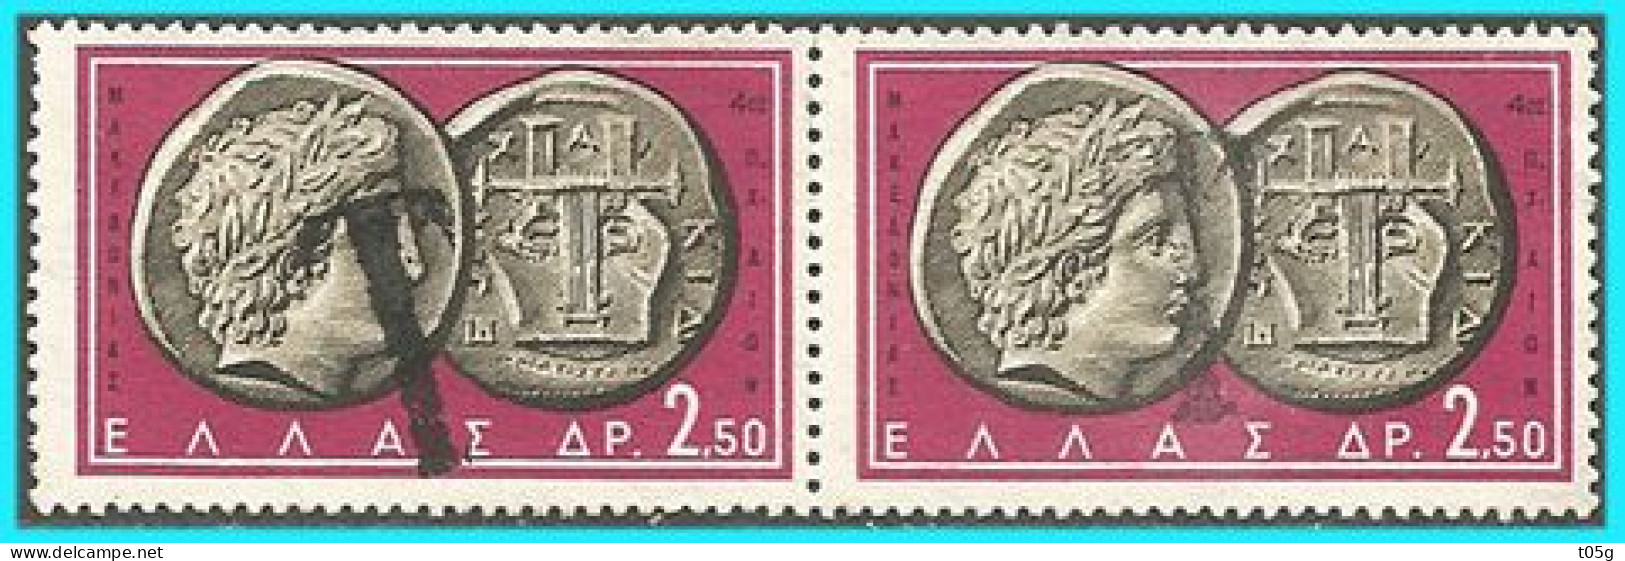 GREECE- GRECE- HELLAS 1959: Canc (T= ΕΙΣΠΡΑΚΤΕΟΝ ΤΕΛΟΣ)   on  2,50drx  "Ancient Greek Coins  A"  Used - Oblitérés